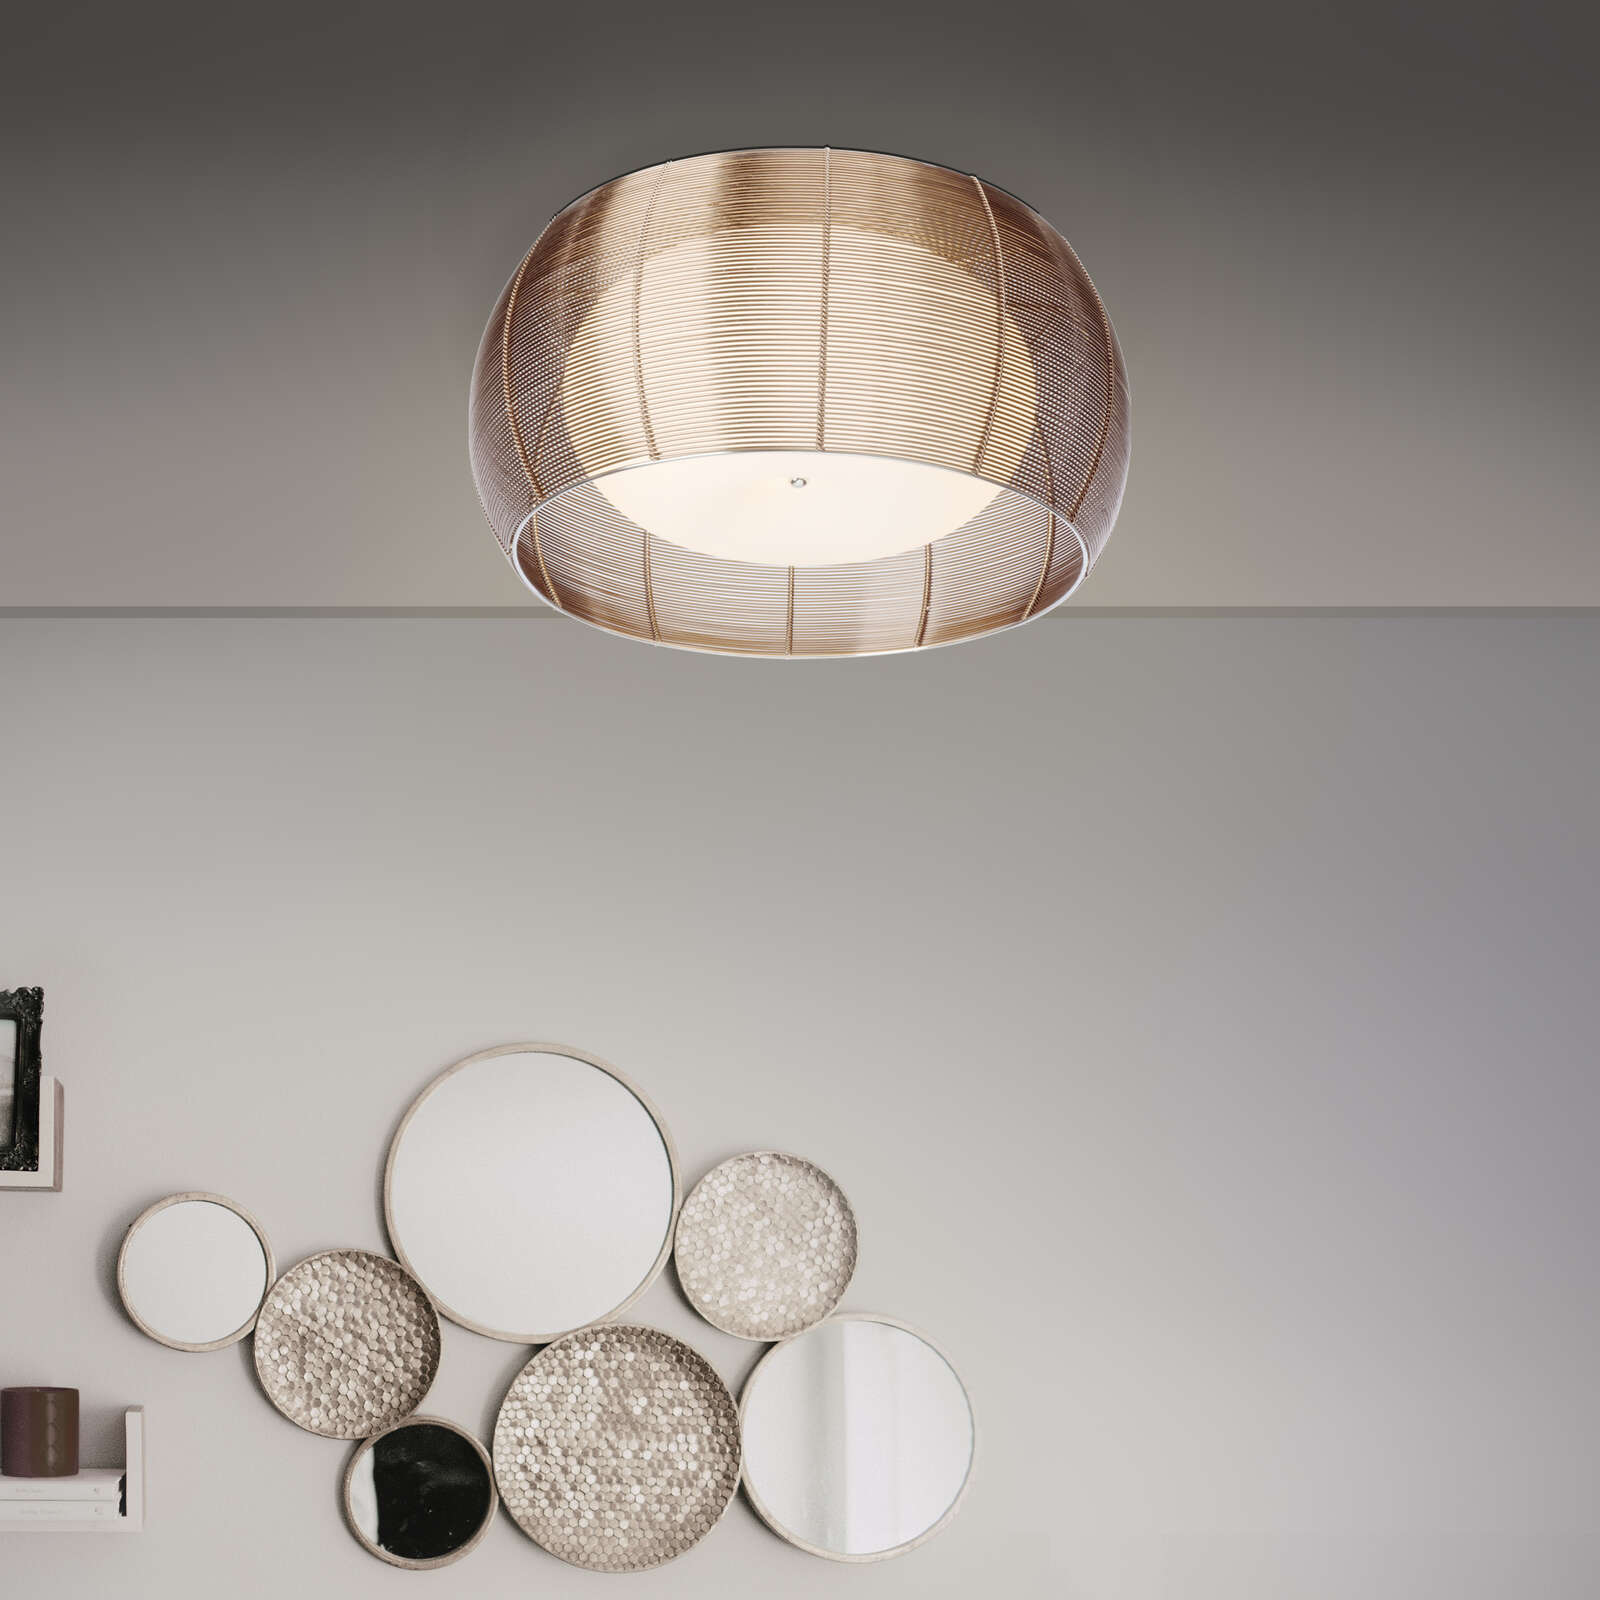             Glazen plafondlamp - Maxime 10 - Bruin
        